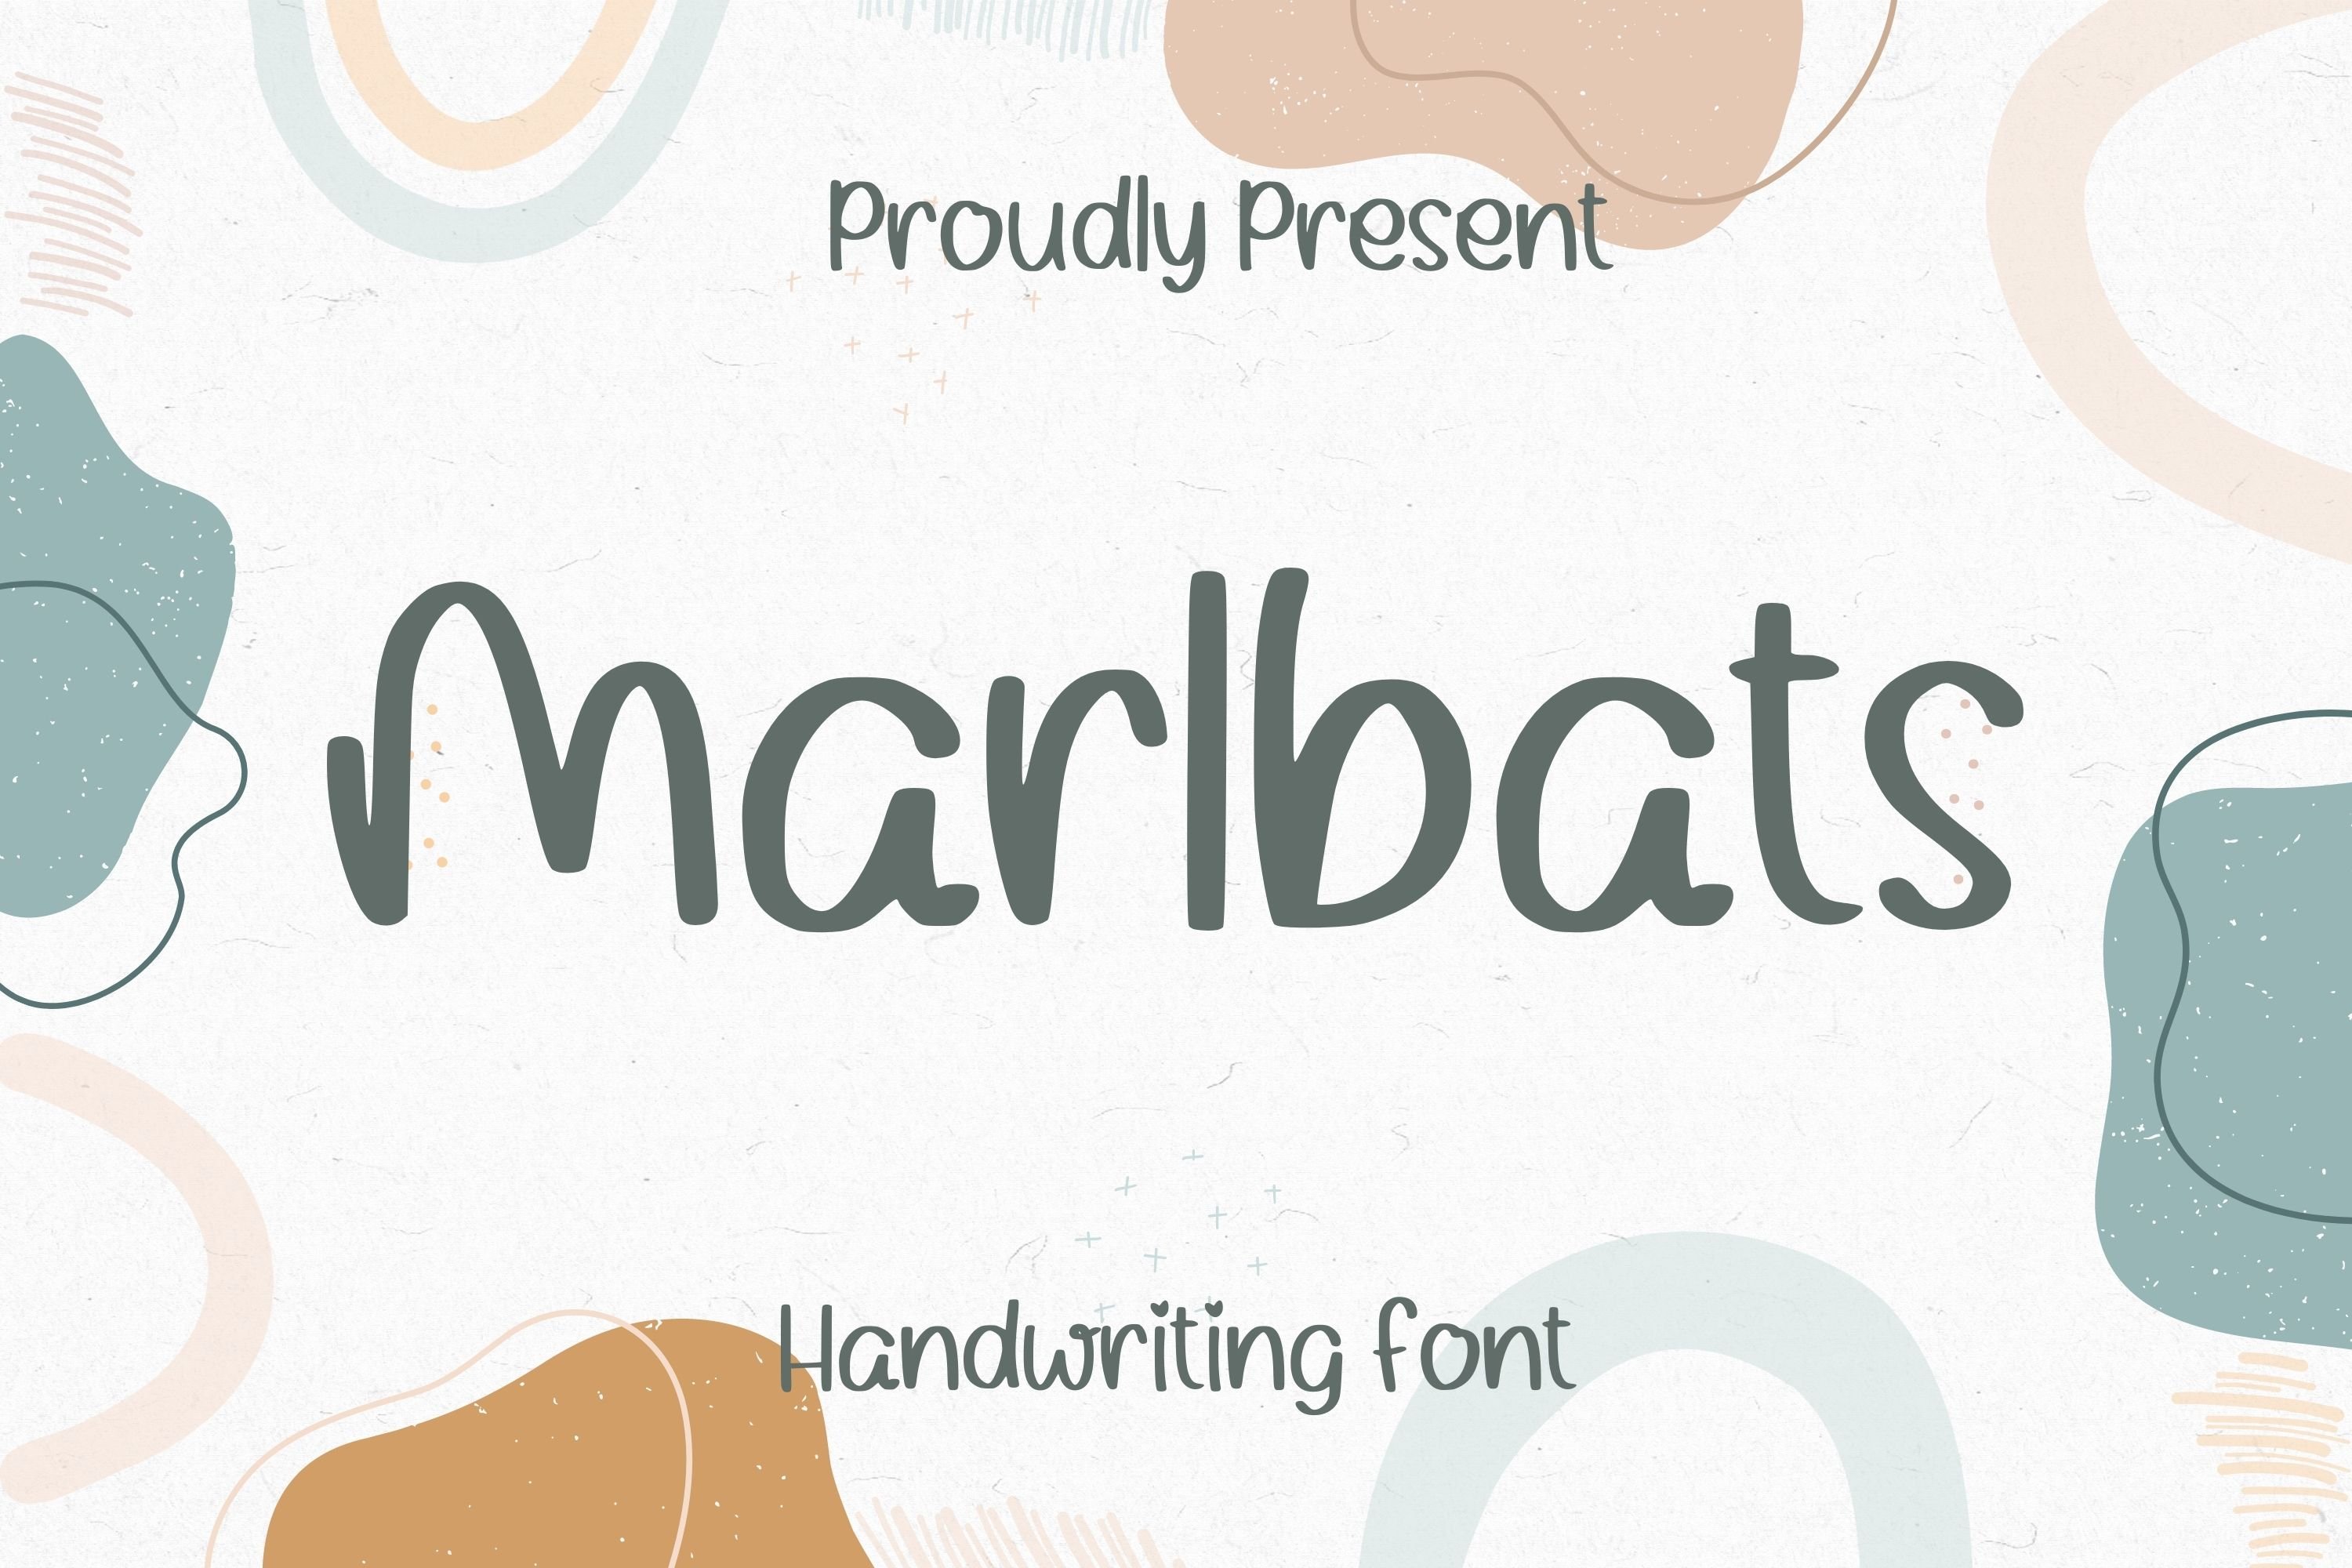 Marlbats Font cover image.